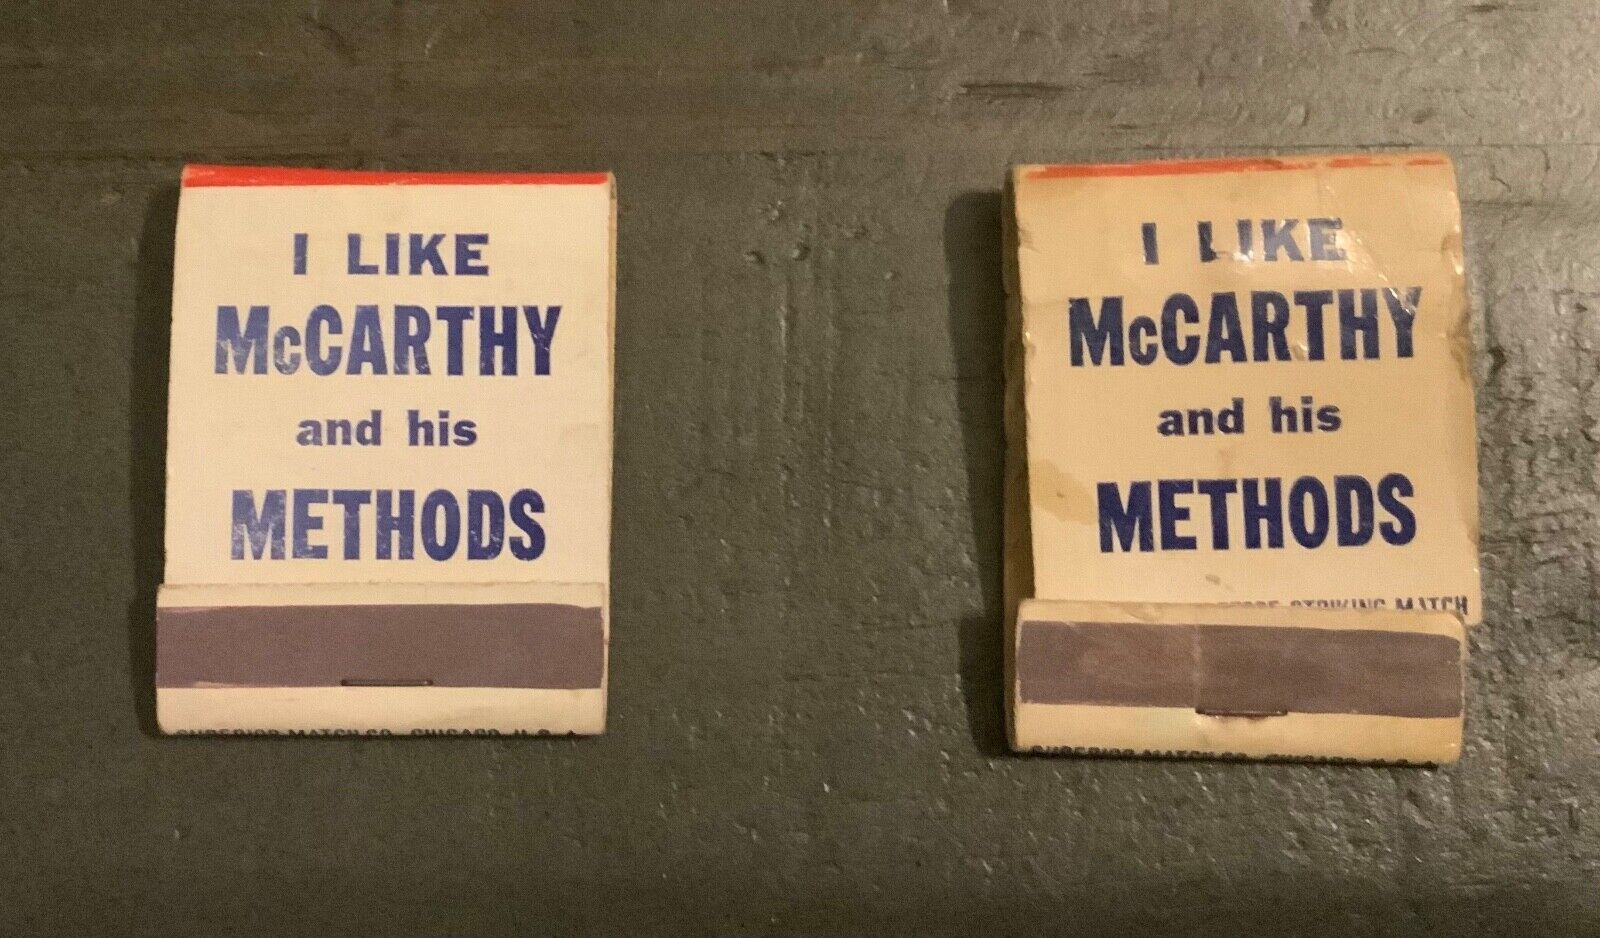 Senator Joe Mccarthy matchbooks